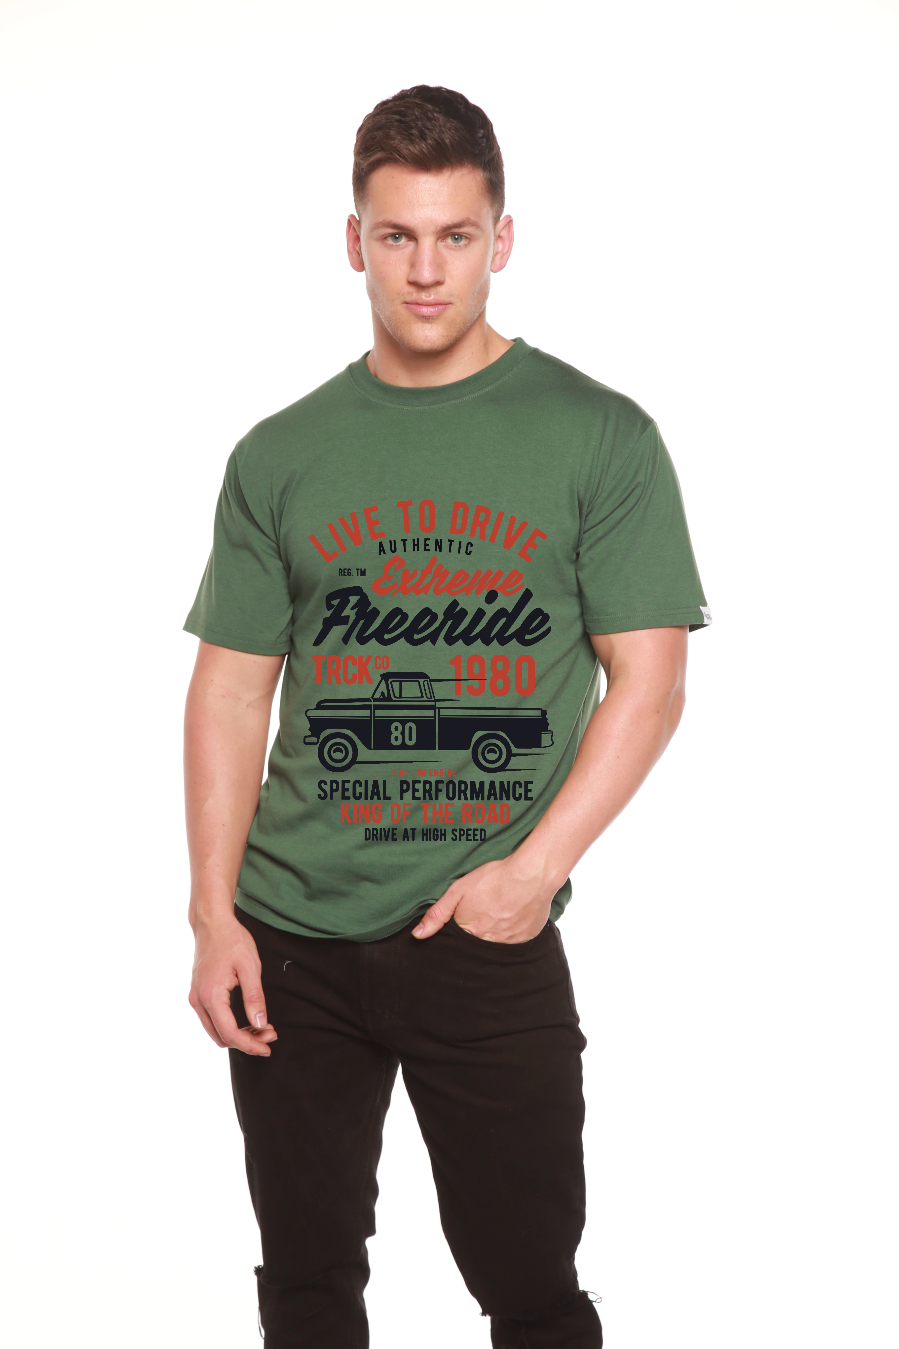 Extreme Freeride Men's Bamboo Viscose/Organic Cotton Short Sleeve T-Shirt - Spun Bamboo